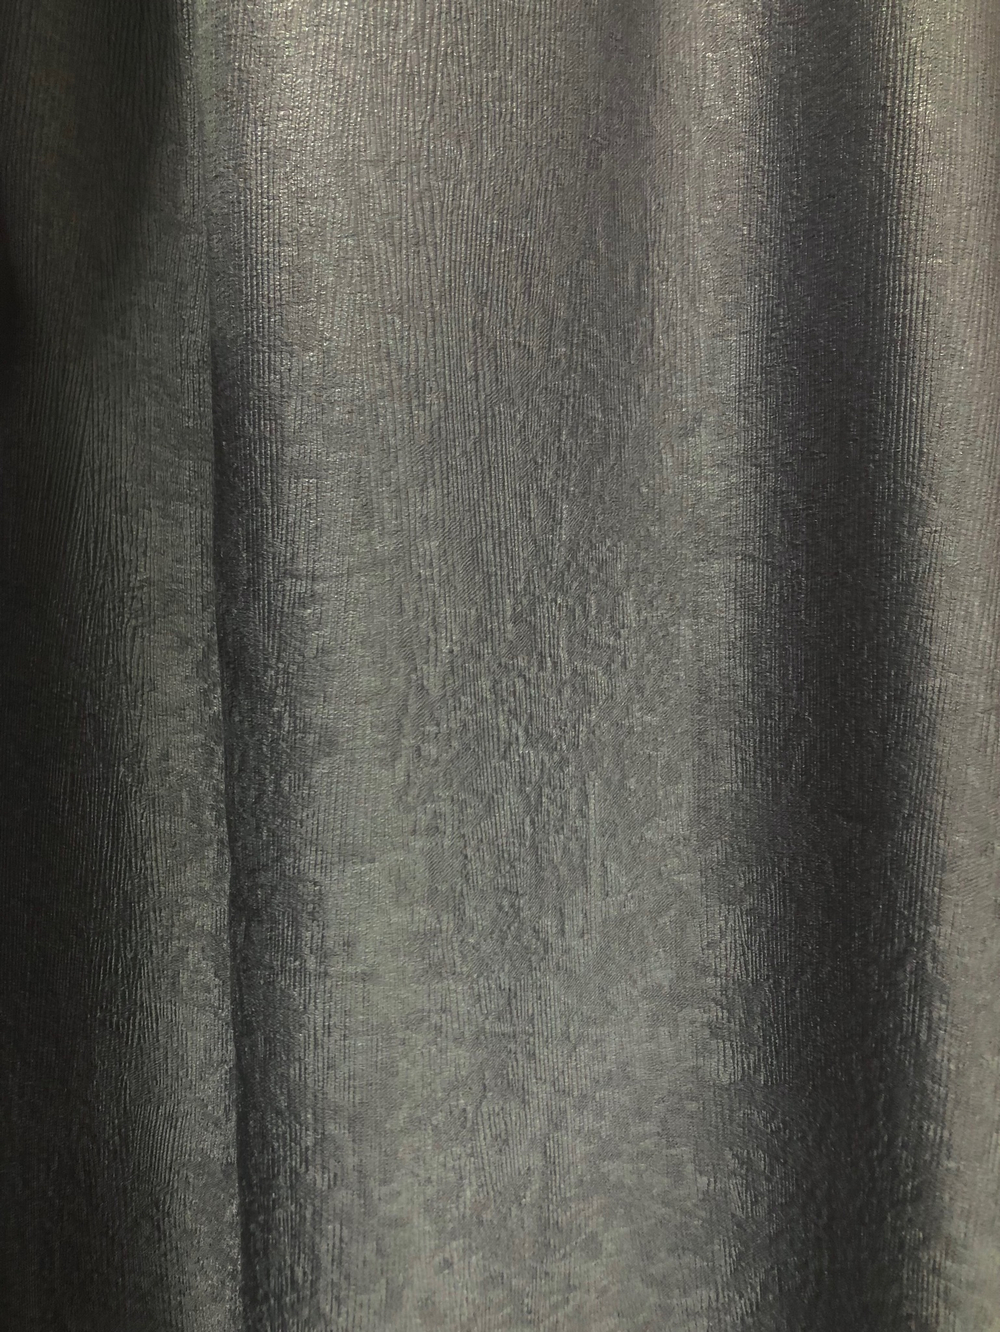 Ткань портьерная Софт, цвет серый, артикул 327476